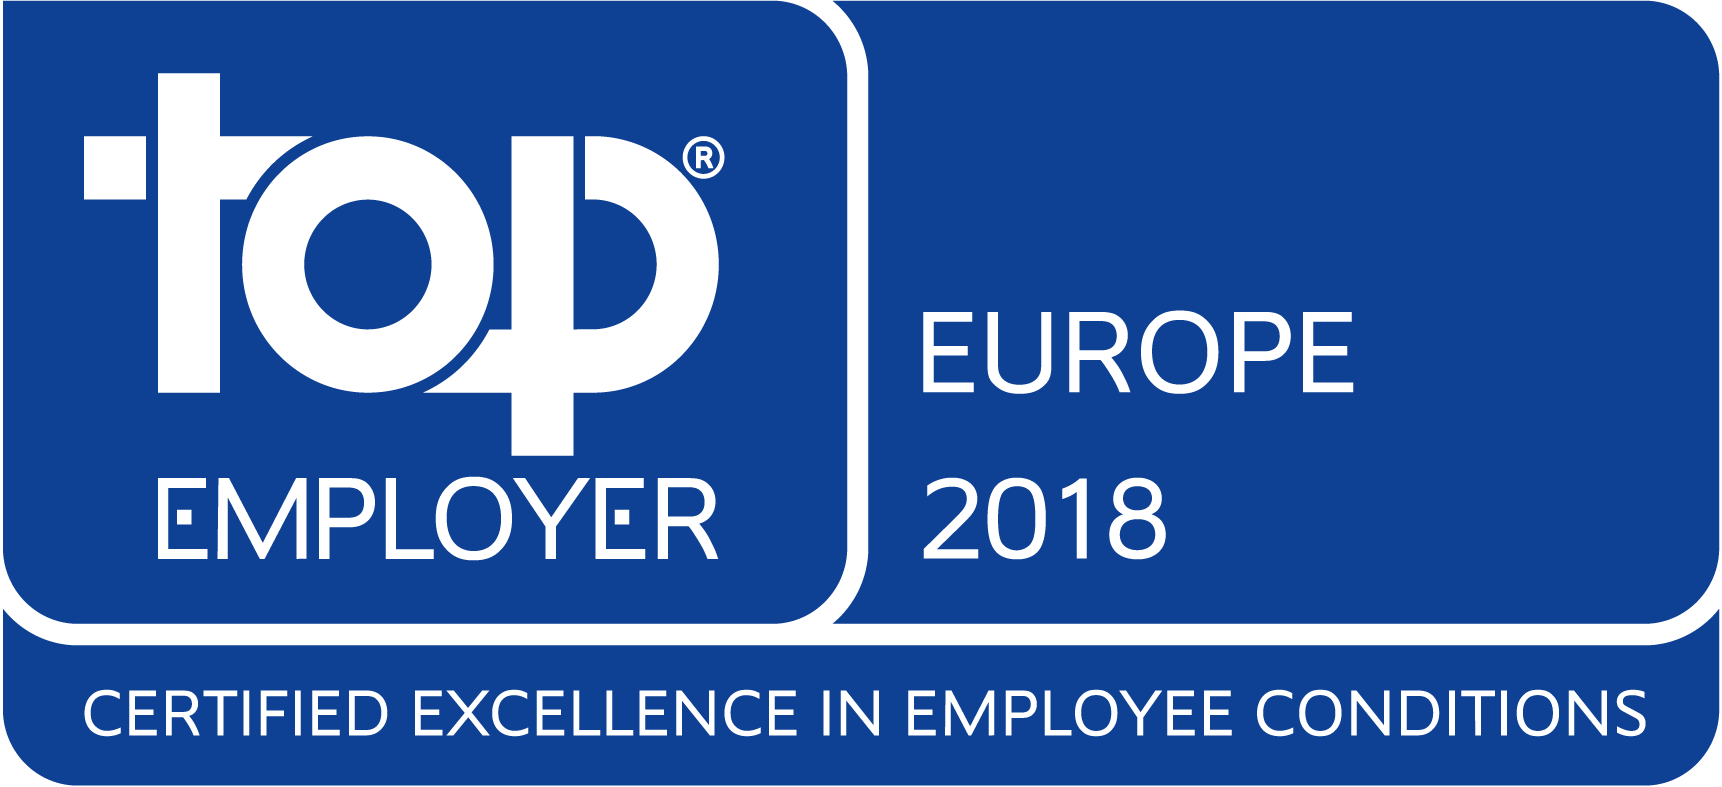 Top Employer Europa 2018